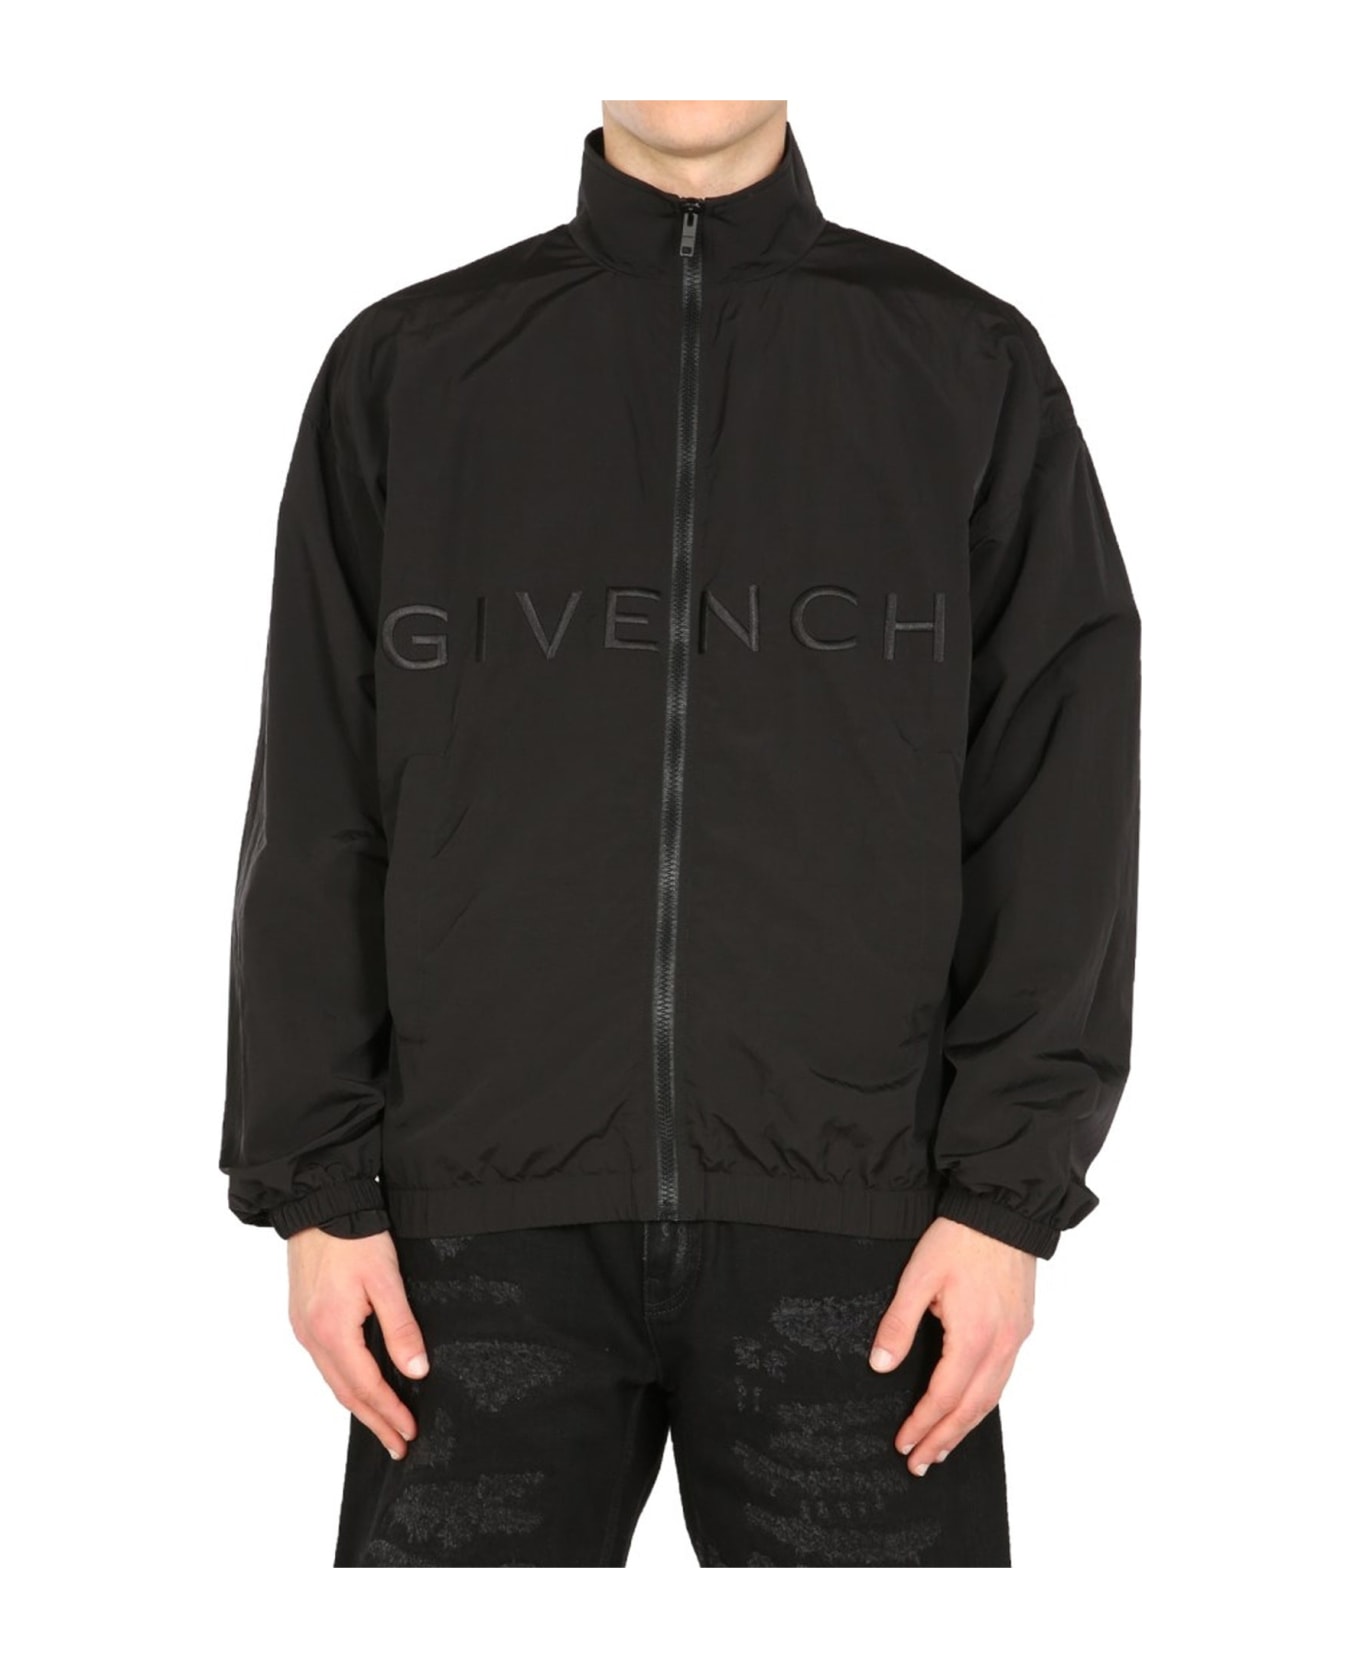 Givenchy Logo Windbreaker Jacket - Black ジャケット